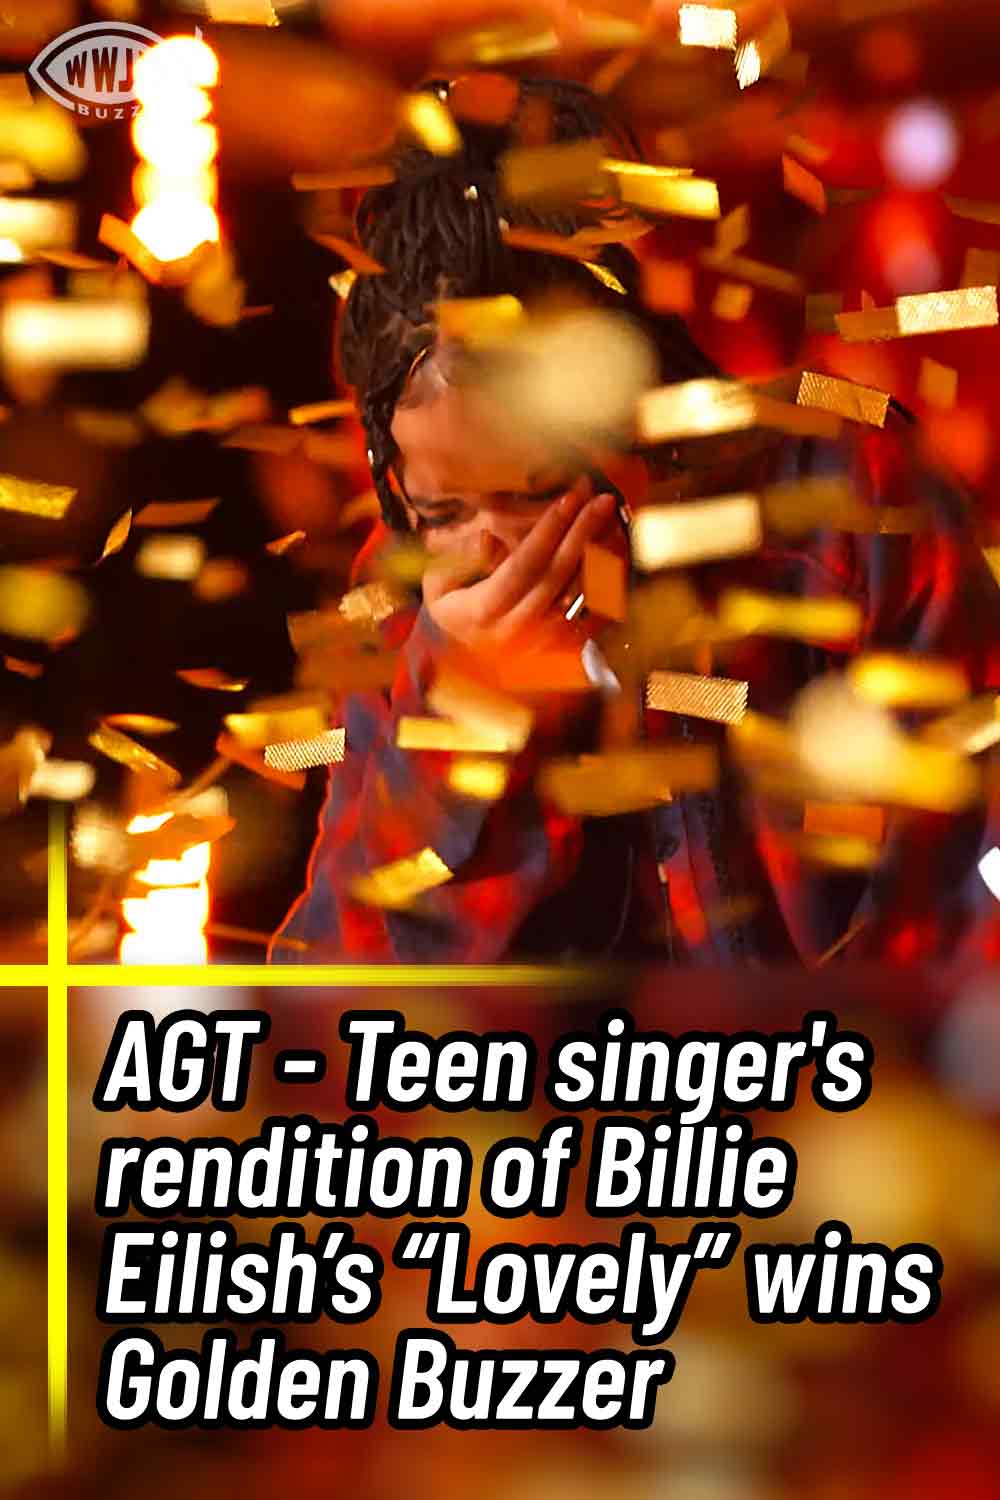 AGT - Teen singer\'s rendition of Billie Eilish’s “Lovely” wins Golden Buzzer